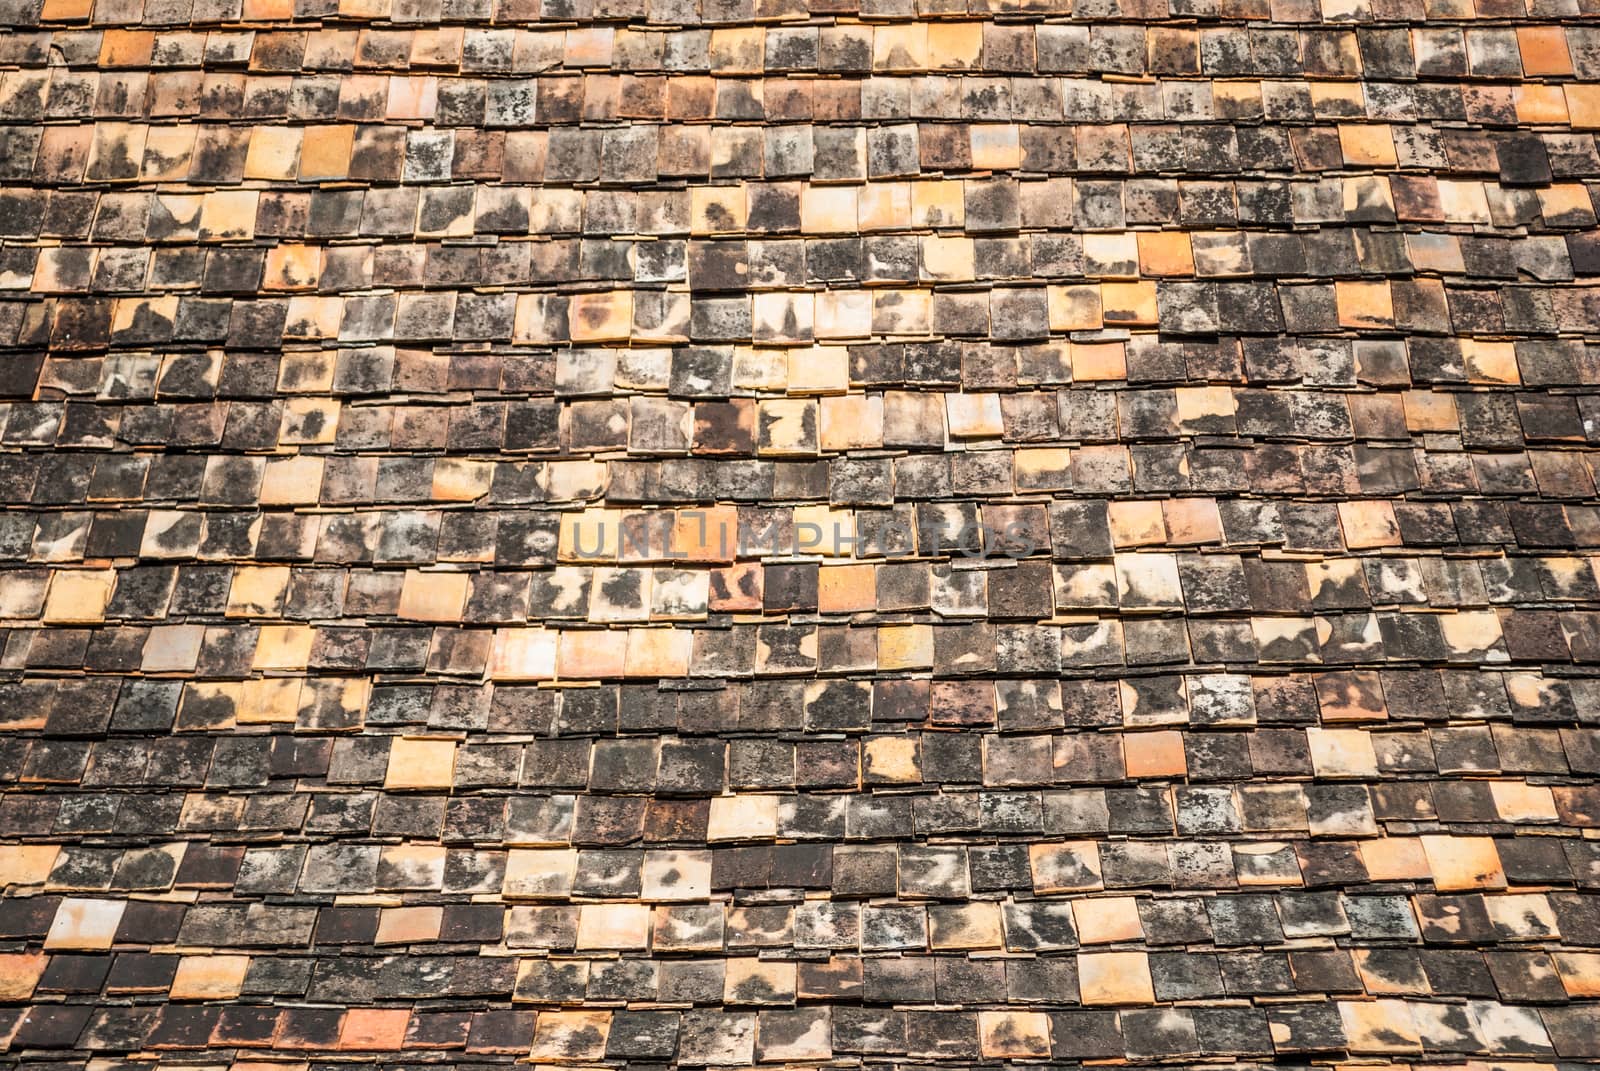 Northern Thai Brick Roof Background/ Texture.